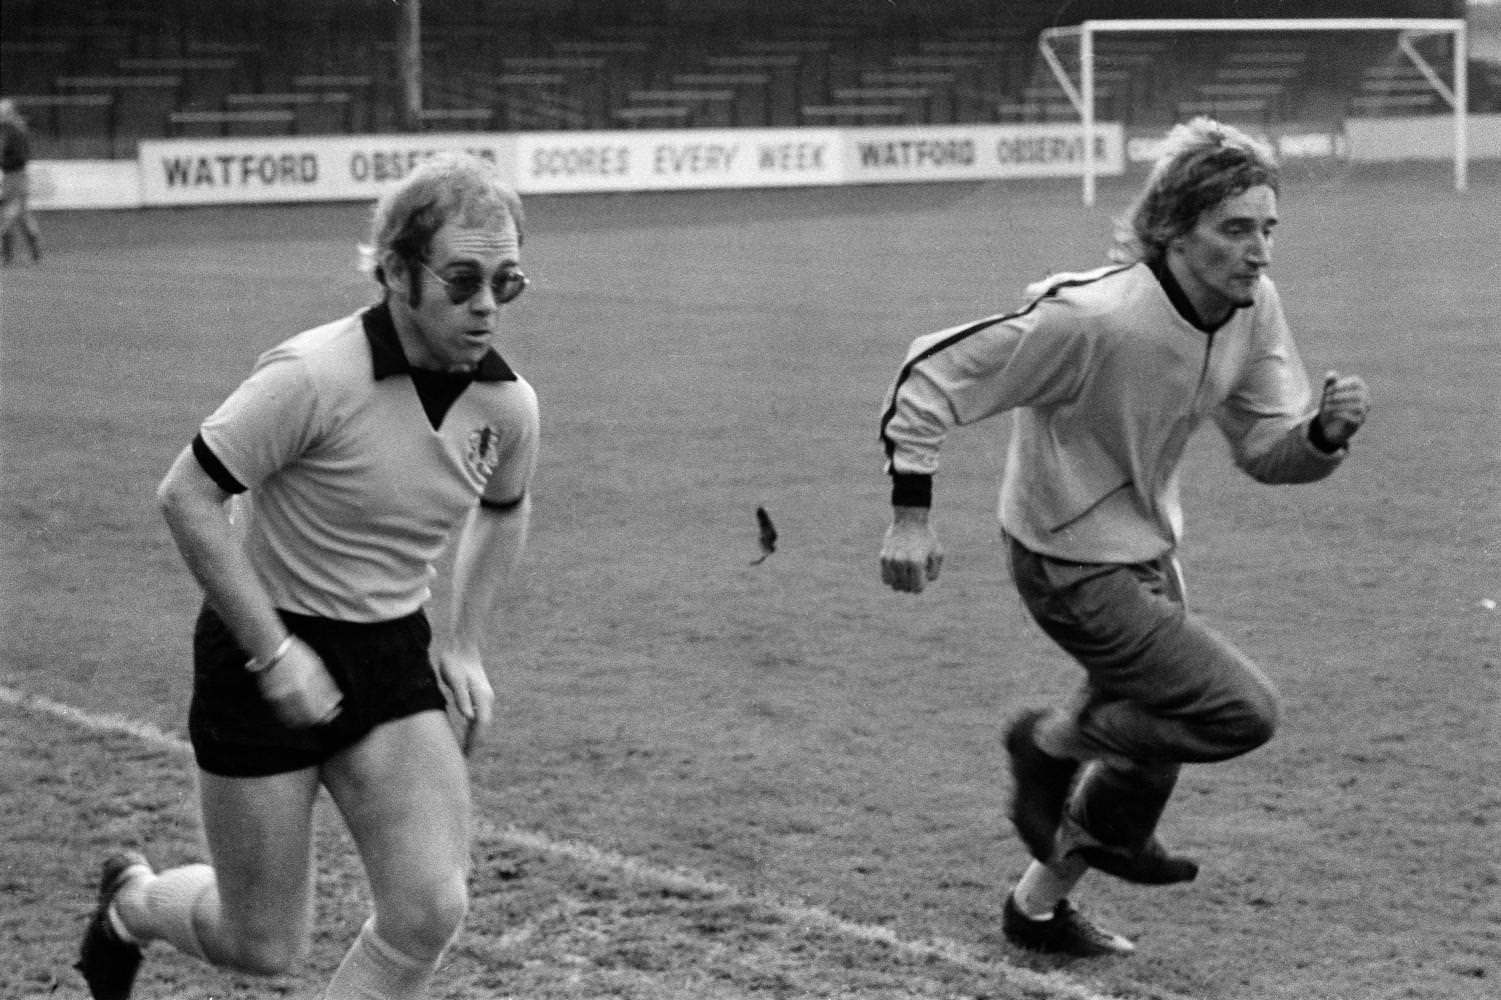 Elton john and Rod Stewart training with Watford Football club, 1974